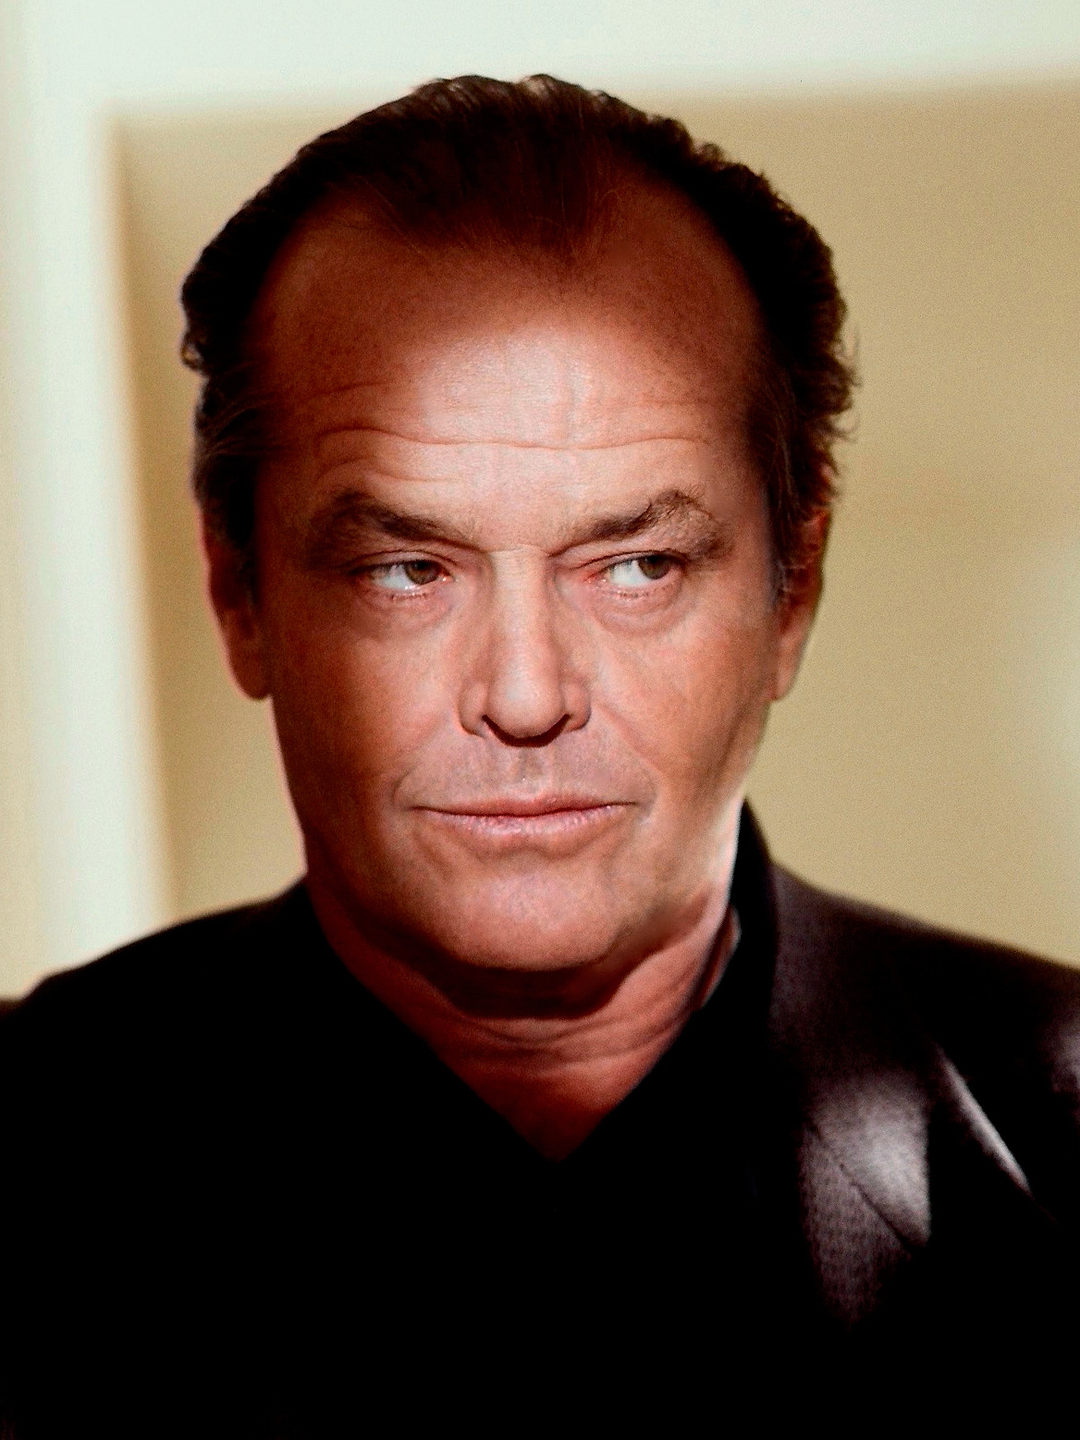 Jack Nicholson biography